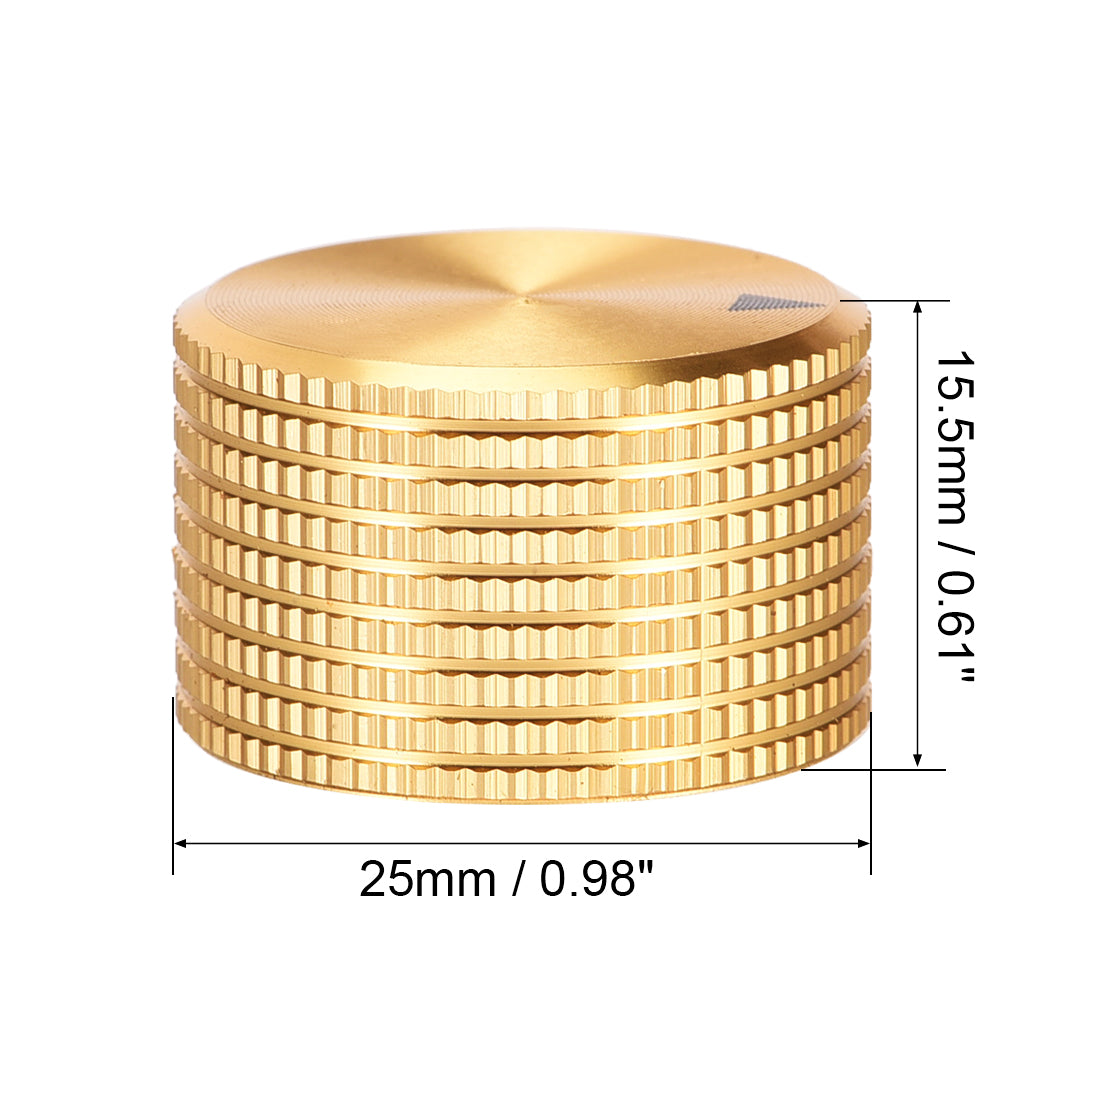 uxcell Uxcell Potentiometer Knob Gold Tone Aluminum Rotary Knob 25mmx15mm Volume Control Knob